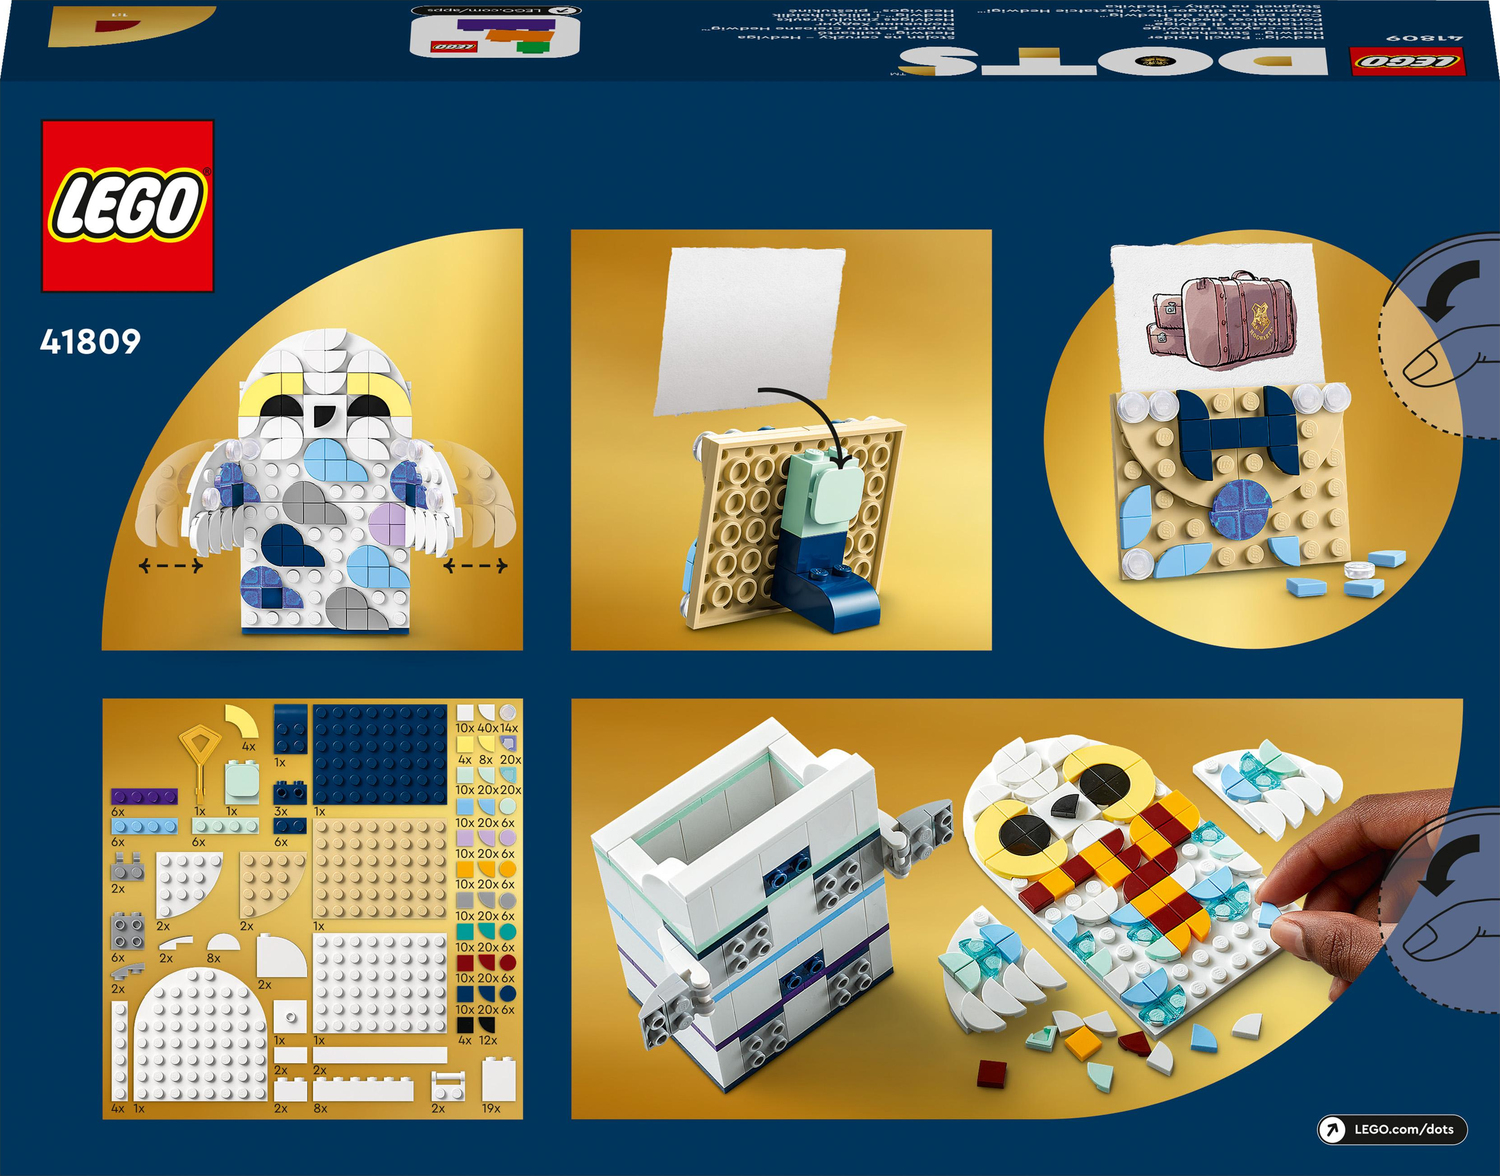 LEGO DOTS Hedwig Pencil Holder 41809, Harry Potter Owl Desk Accessories,  Pencil Pot and Noteholder, Toy Crafts Set for Kids 